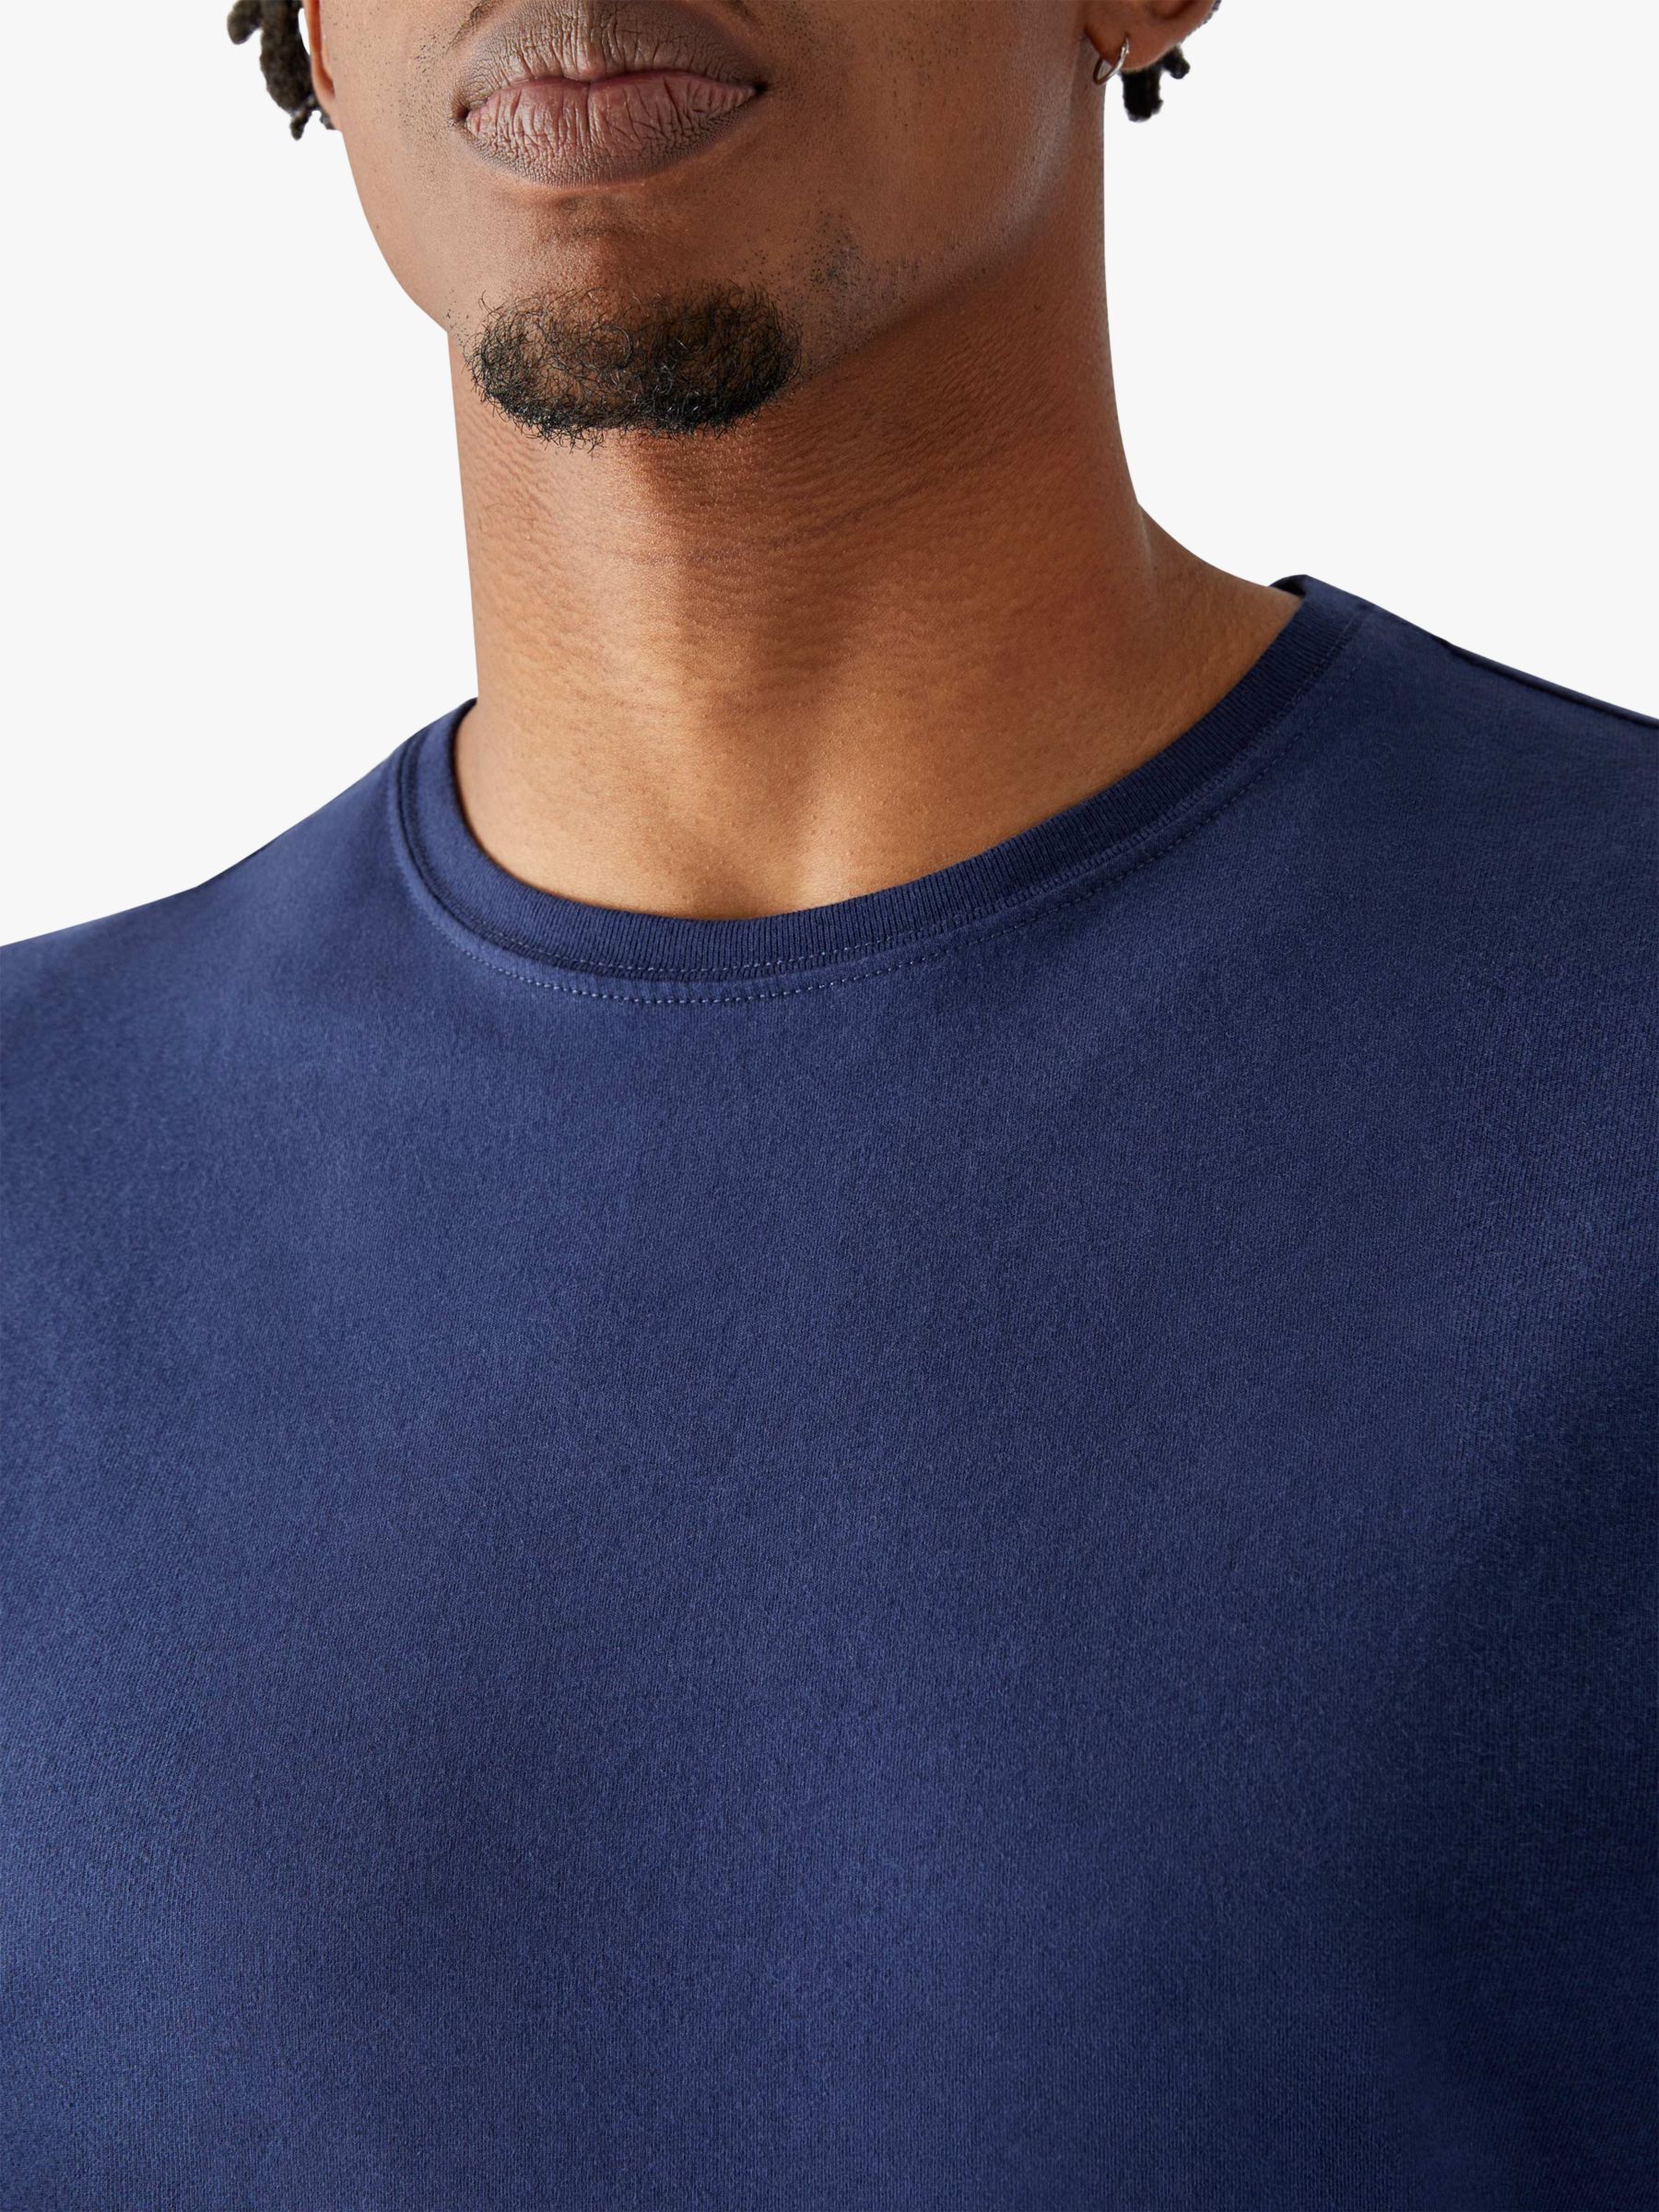 SPOKE Cotton Straight Fit Crew Neck T-Shirt, Navy at John Lewis & Partners